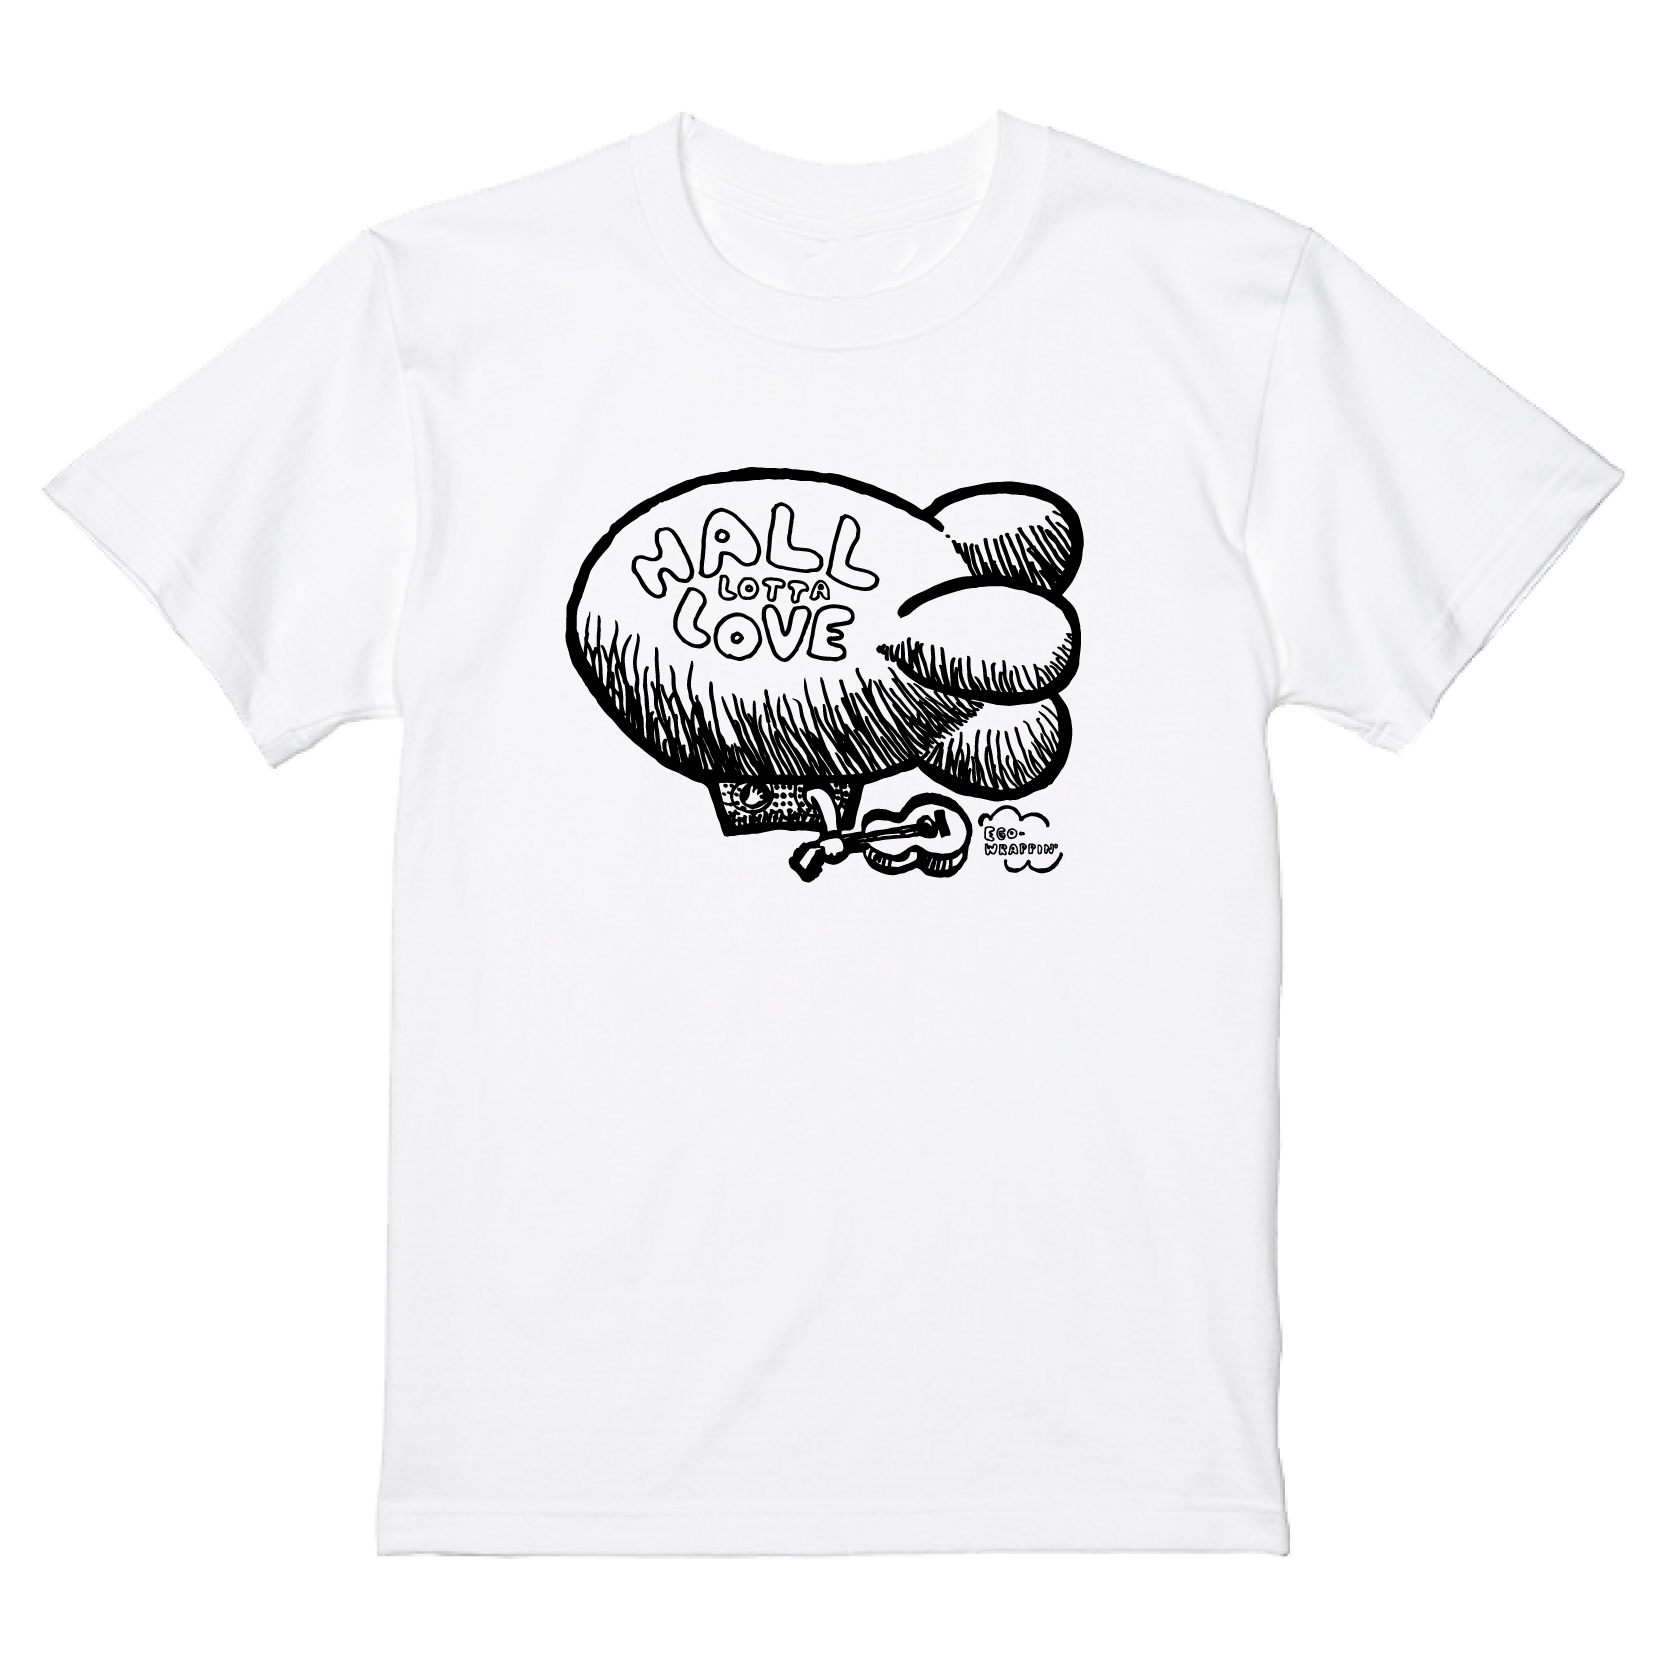 HALL LOTTA LOVE 2020 Tシャツ【WHITE】